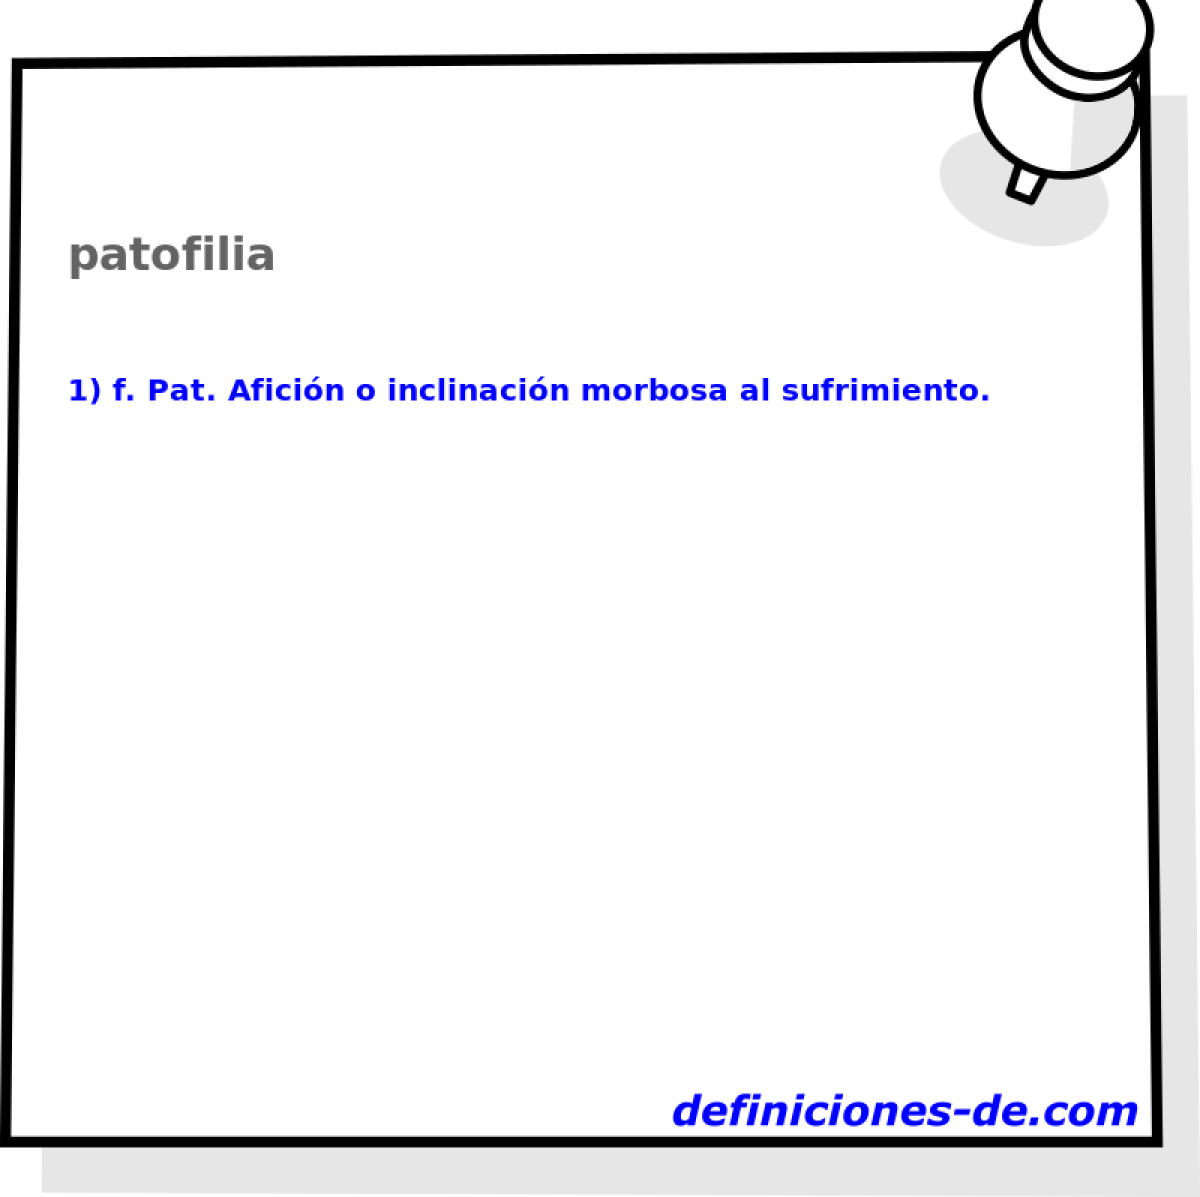 patofilia 